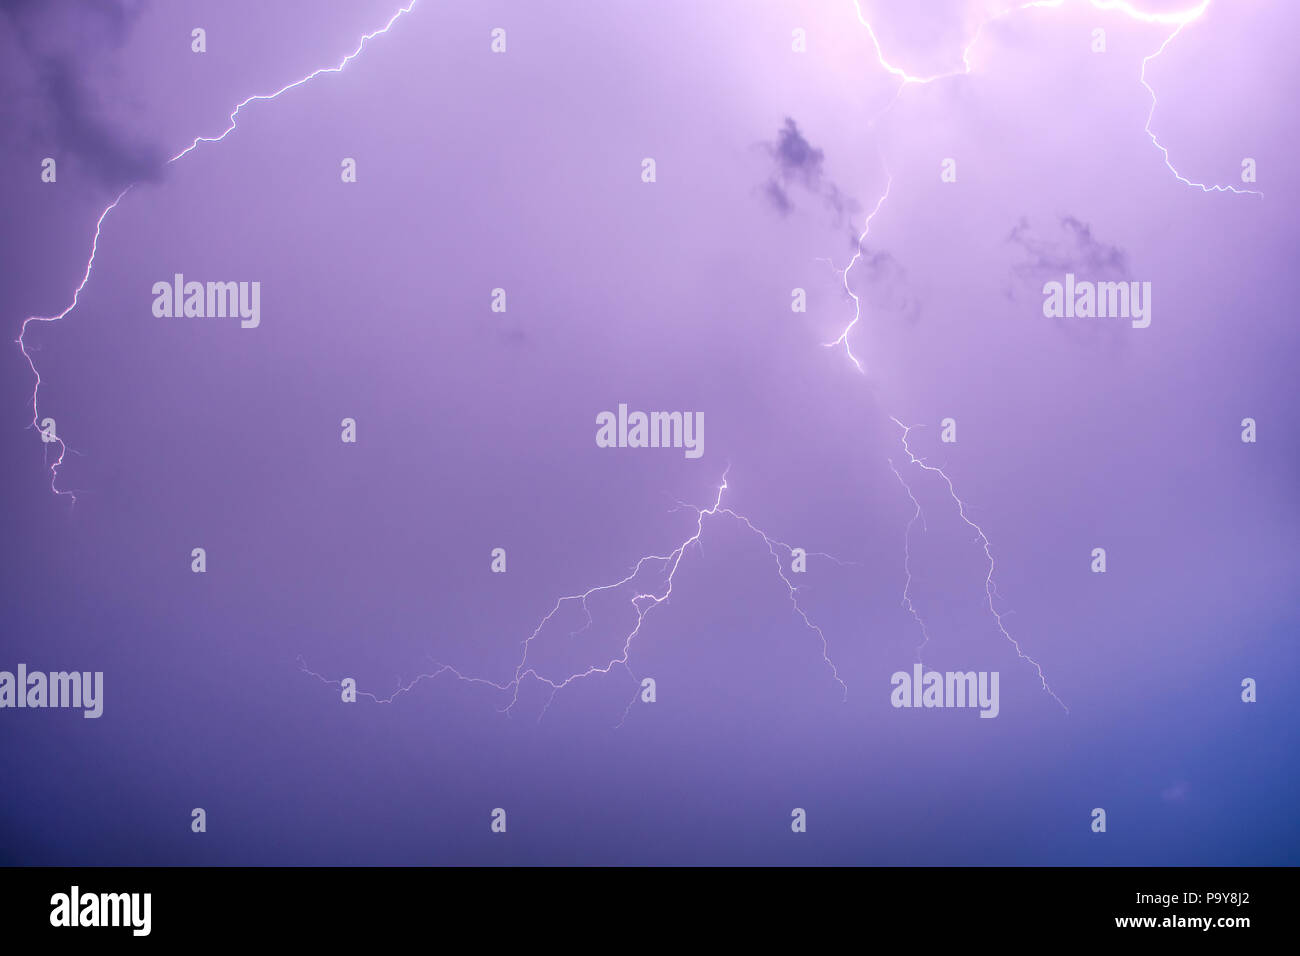 Lightning bolt in a purple sky Stock Photo